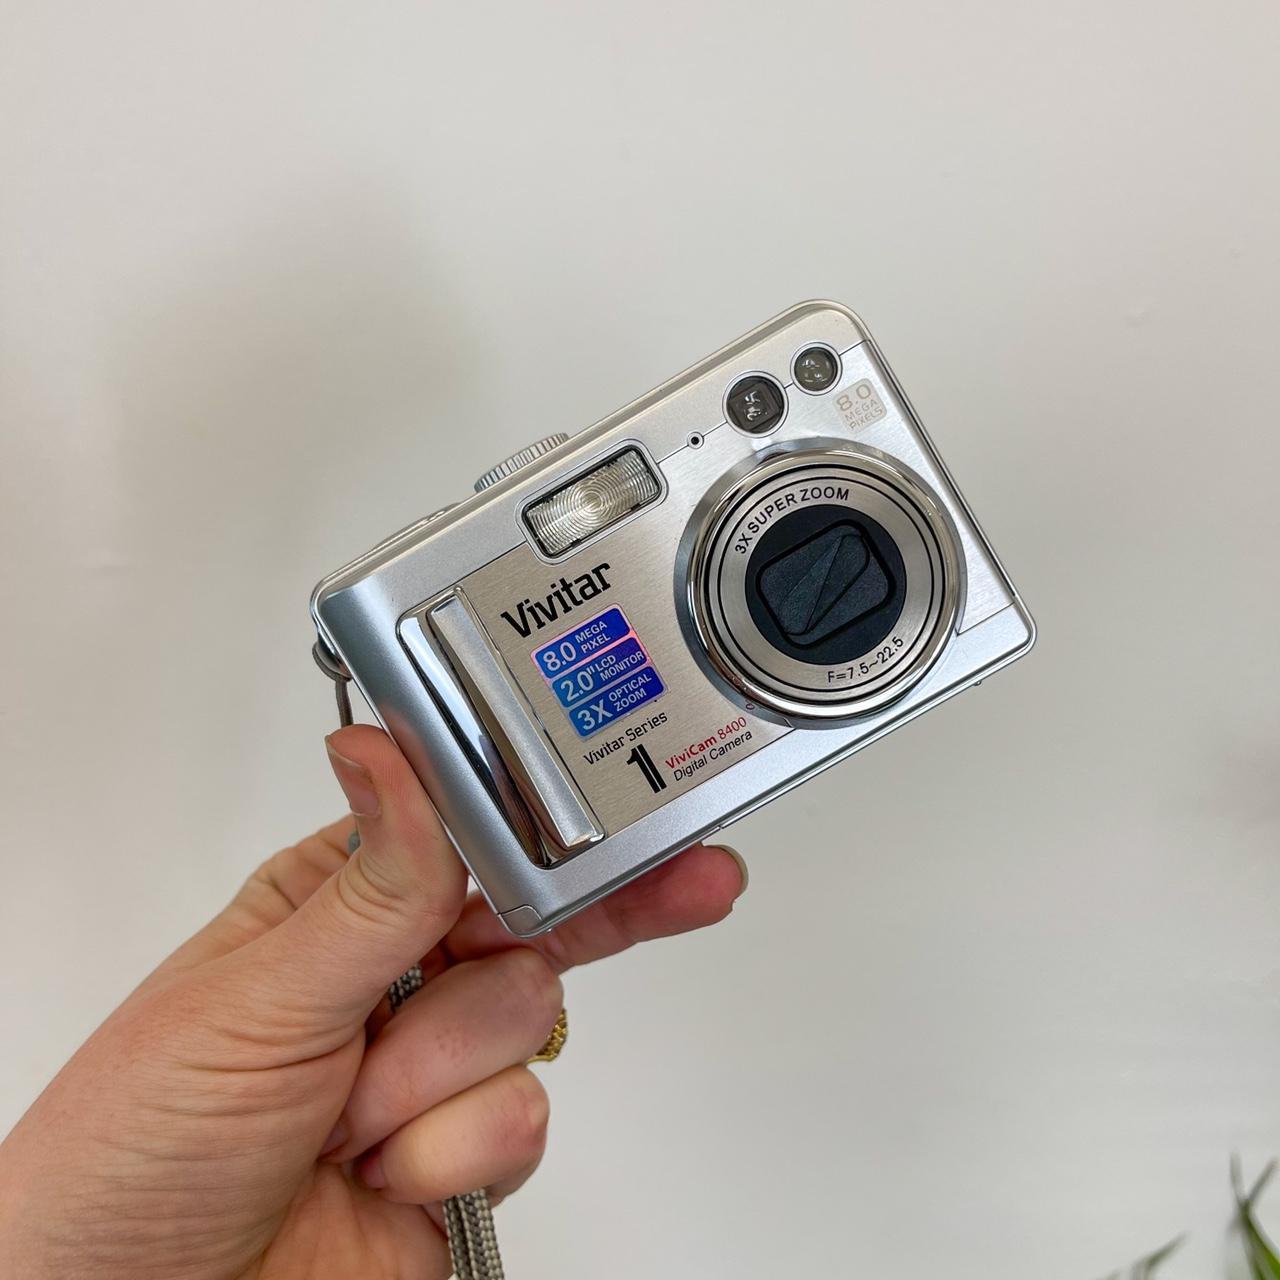 Product Image 1 - Vintage camera

Vivitar Vivicam 8400 model

Y2K